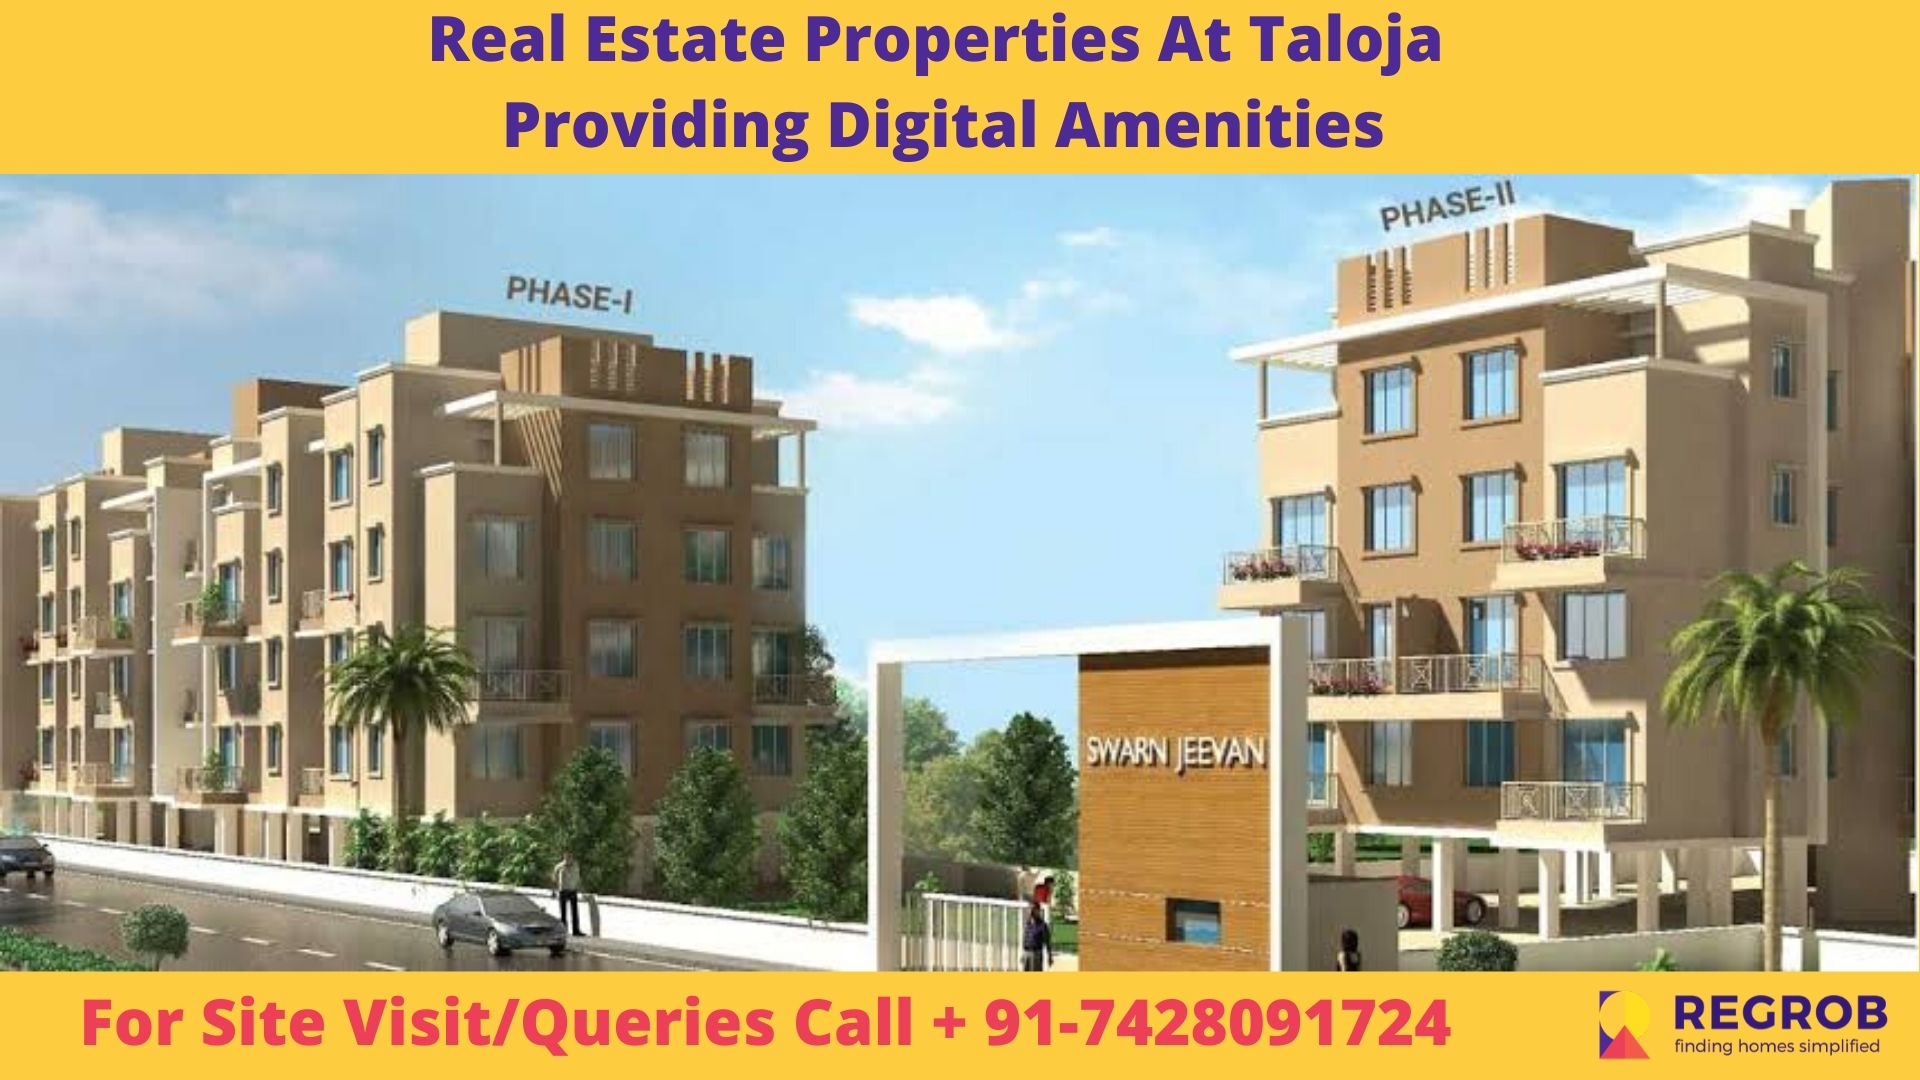 Real Estate Properties At Taloja Providing Digital Amenities